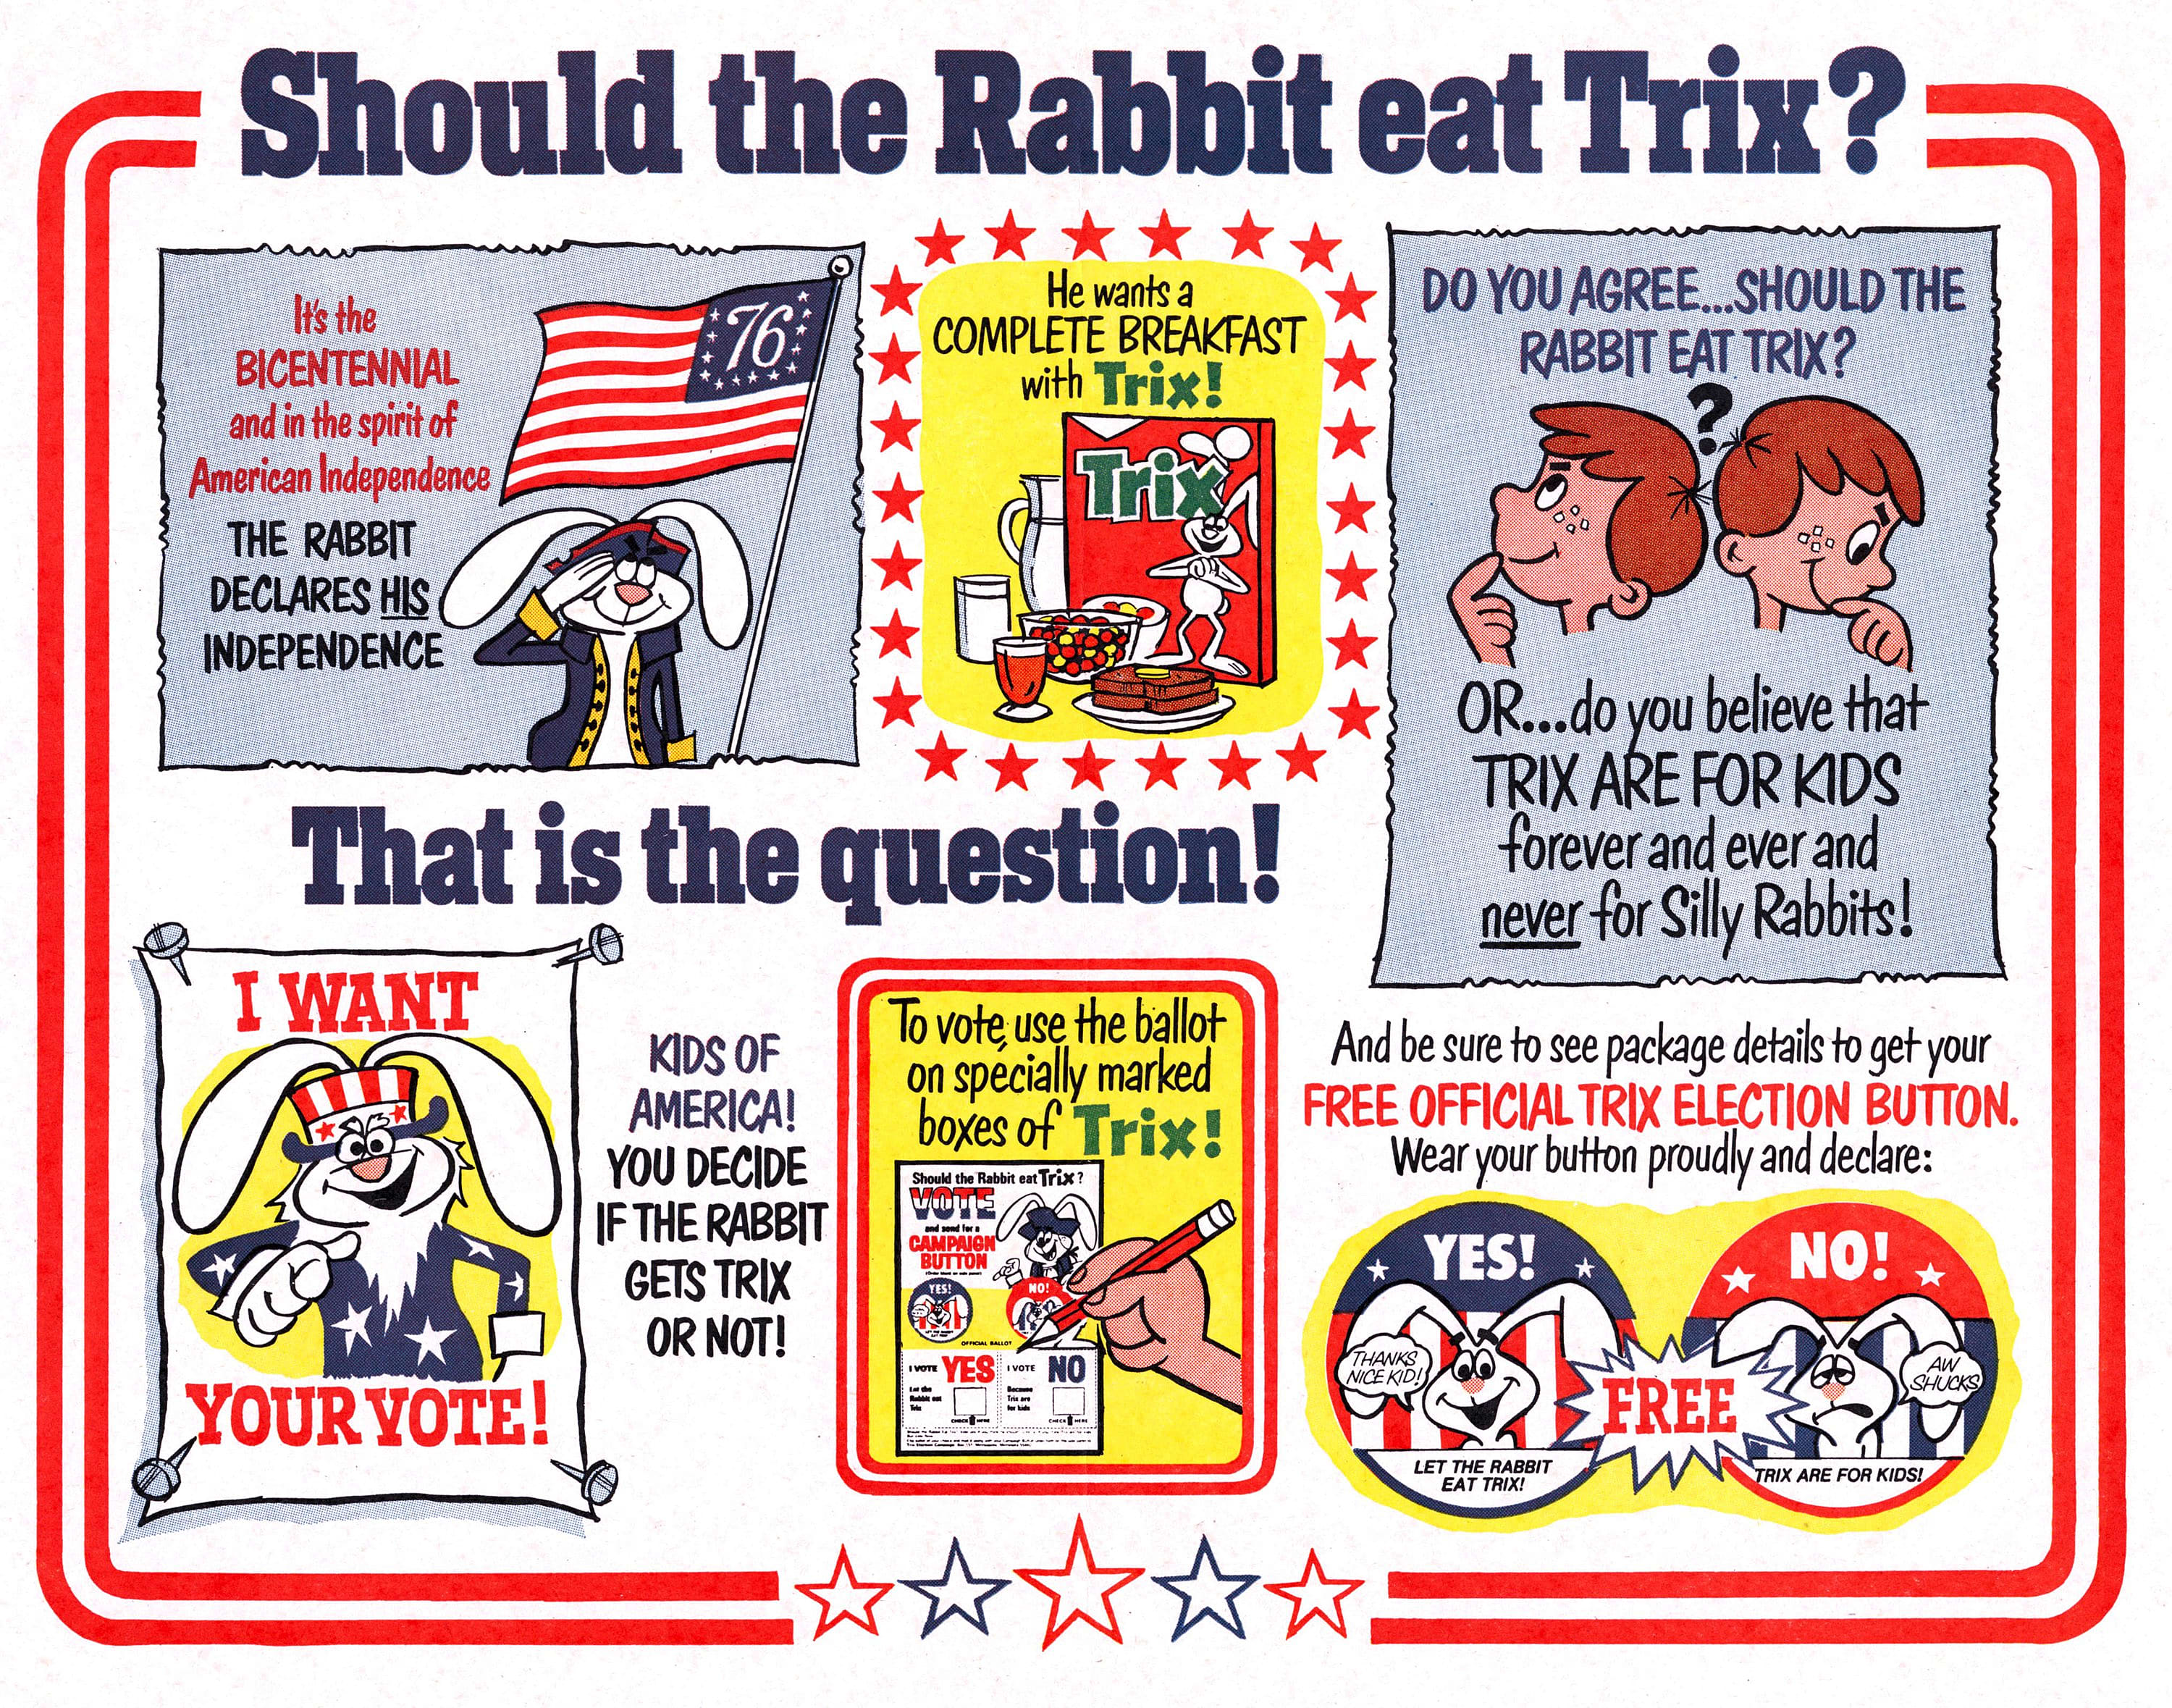 Celebrating 60 years of the Trix Rabbit - General Mills